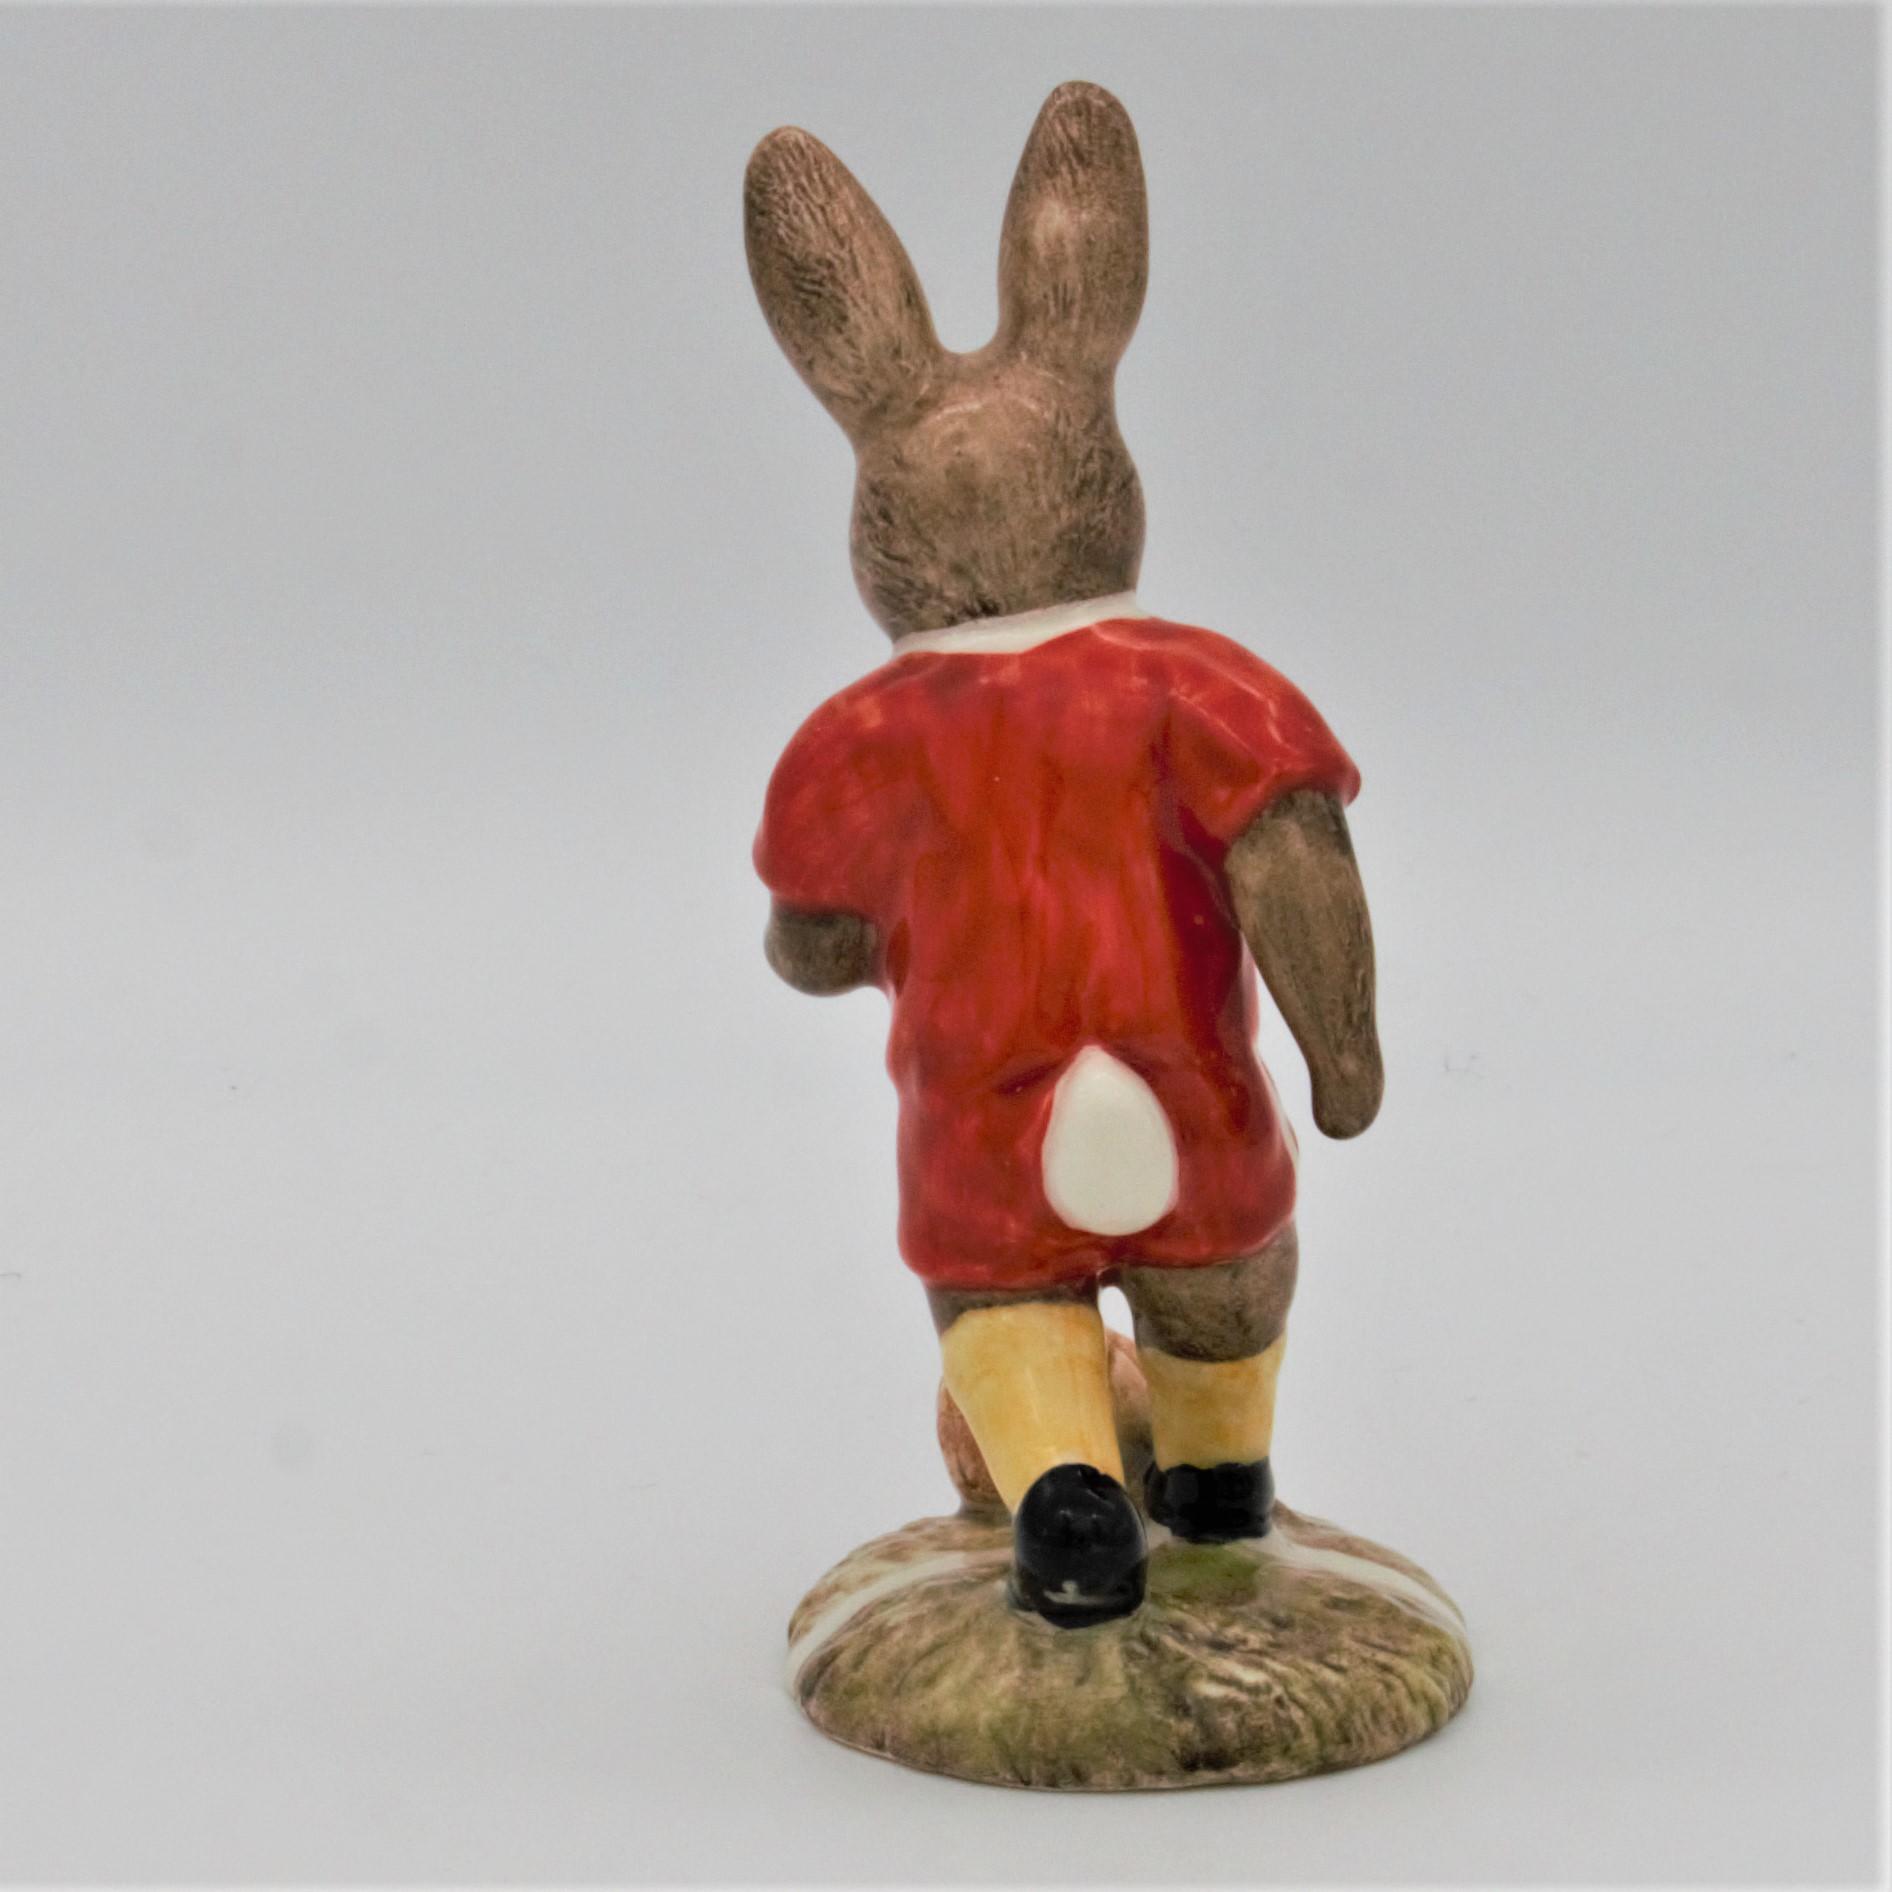 Royal Doulton Bunnykins figure - DB119 Footballer in Red - back